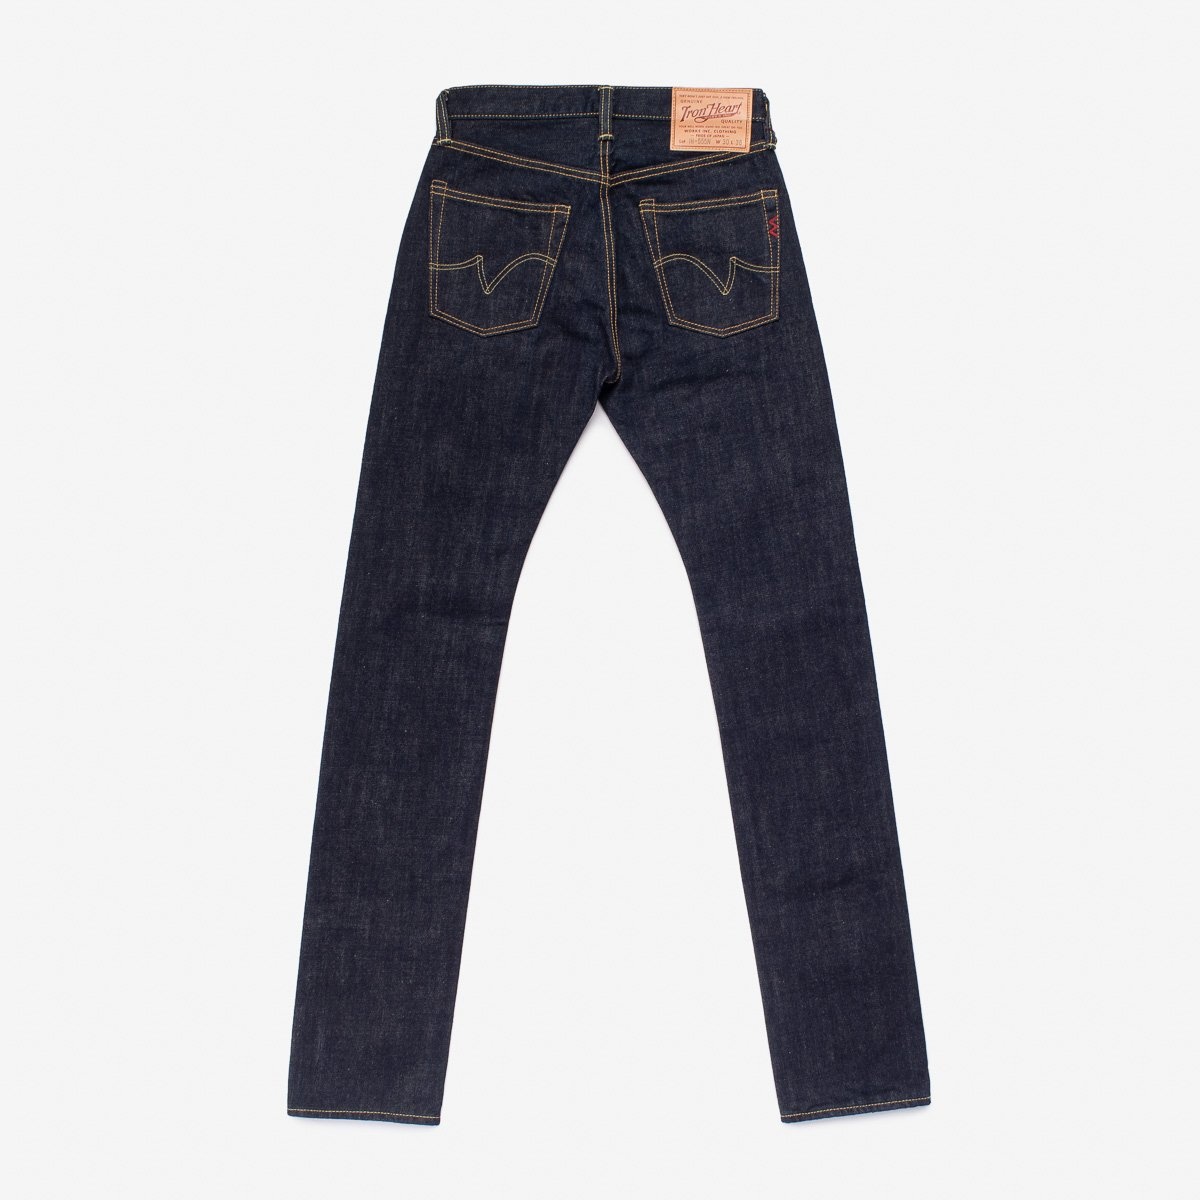 IH-555N 17oz Selvedge Denim Super Slim Cut Jeans - Natural Indigo - 5